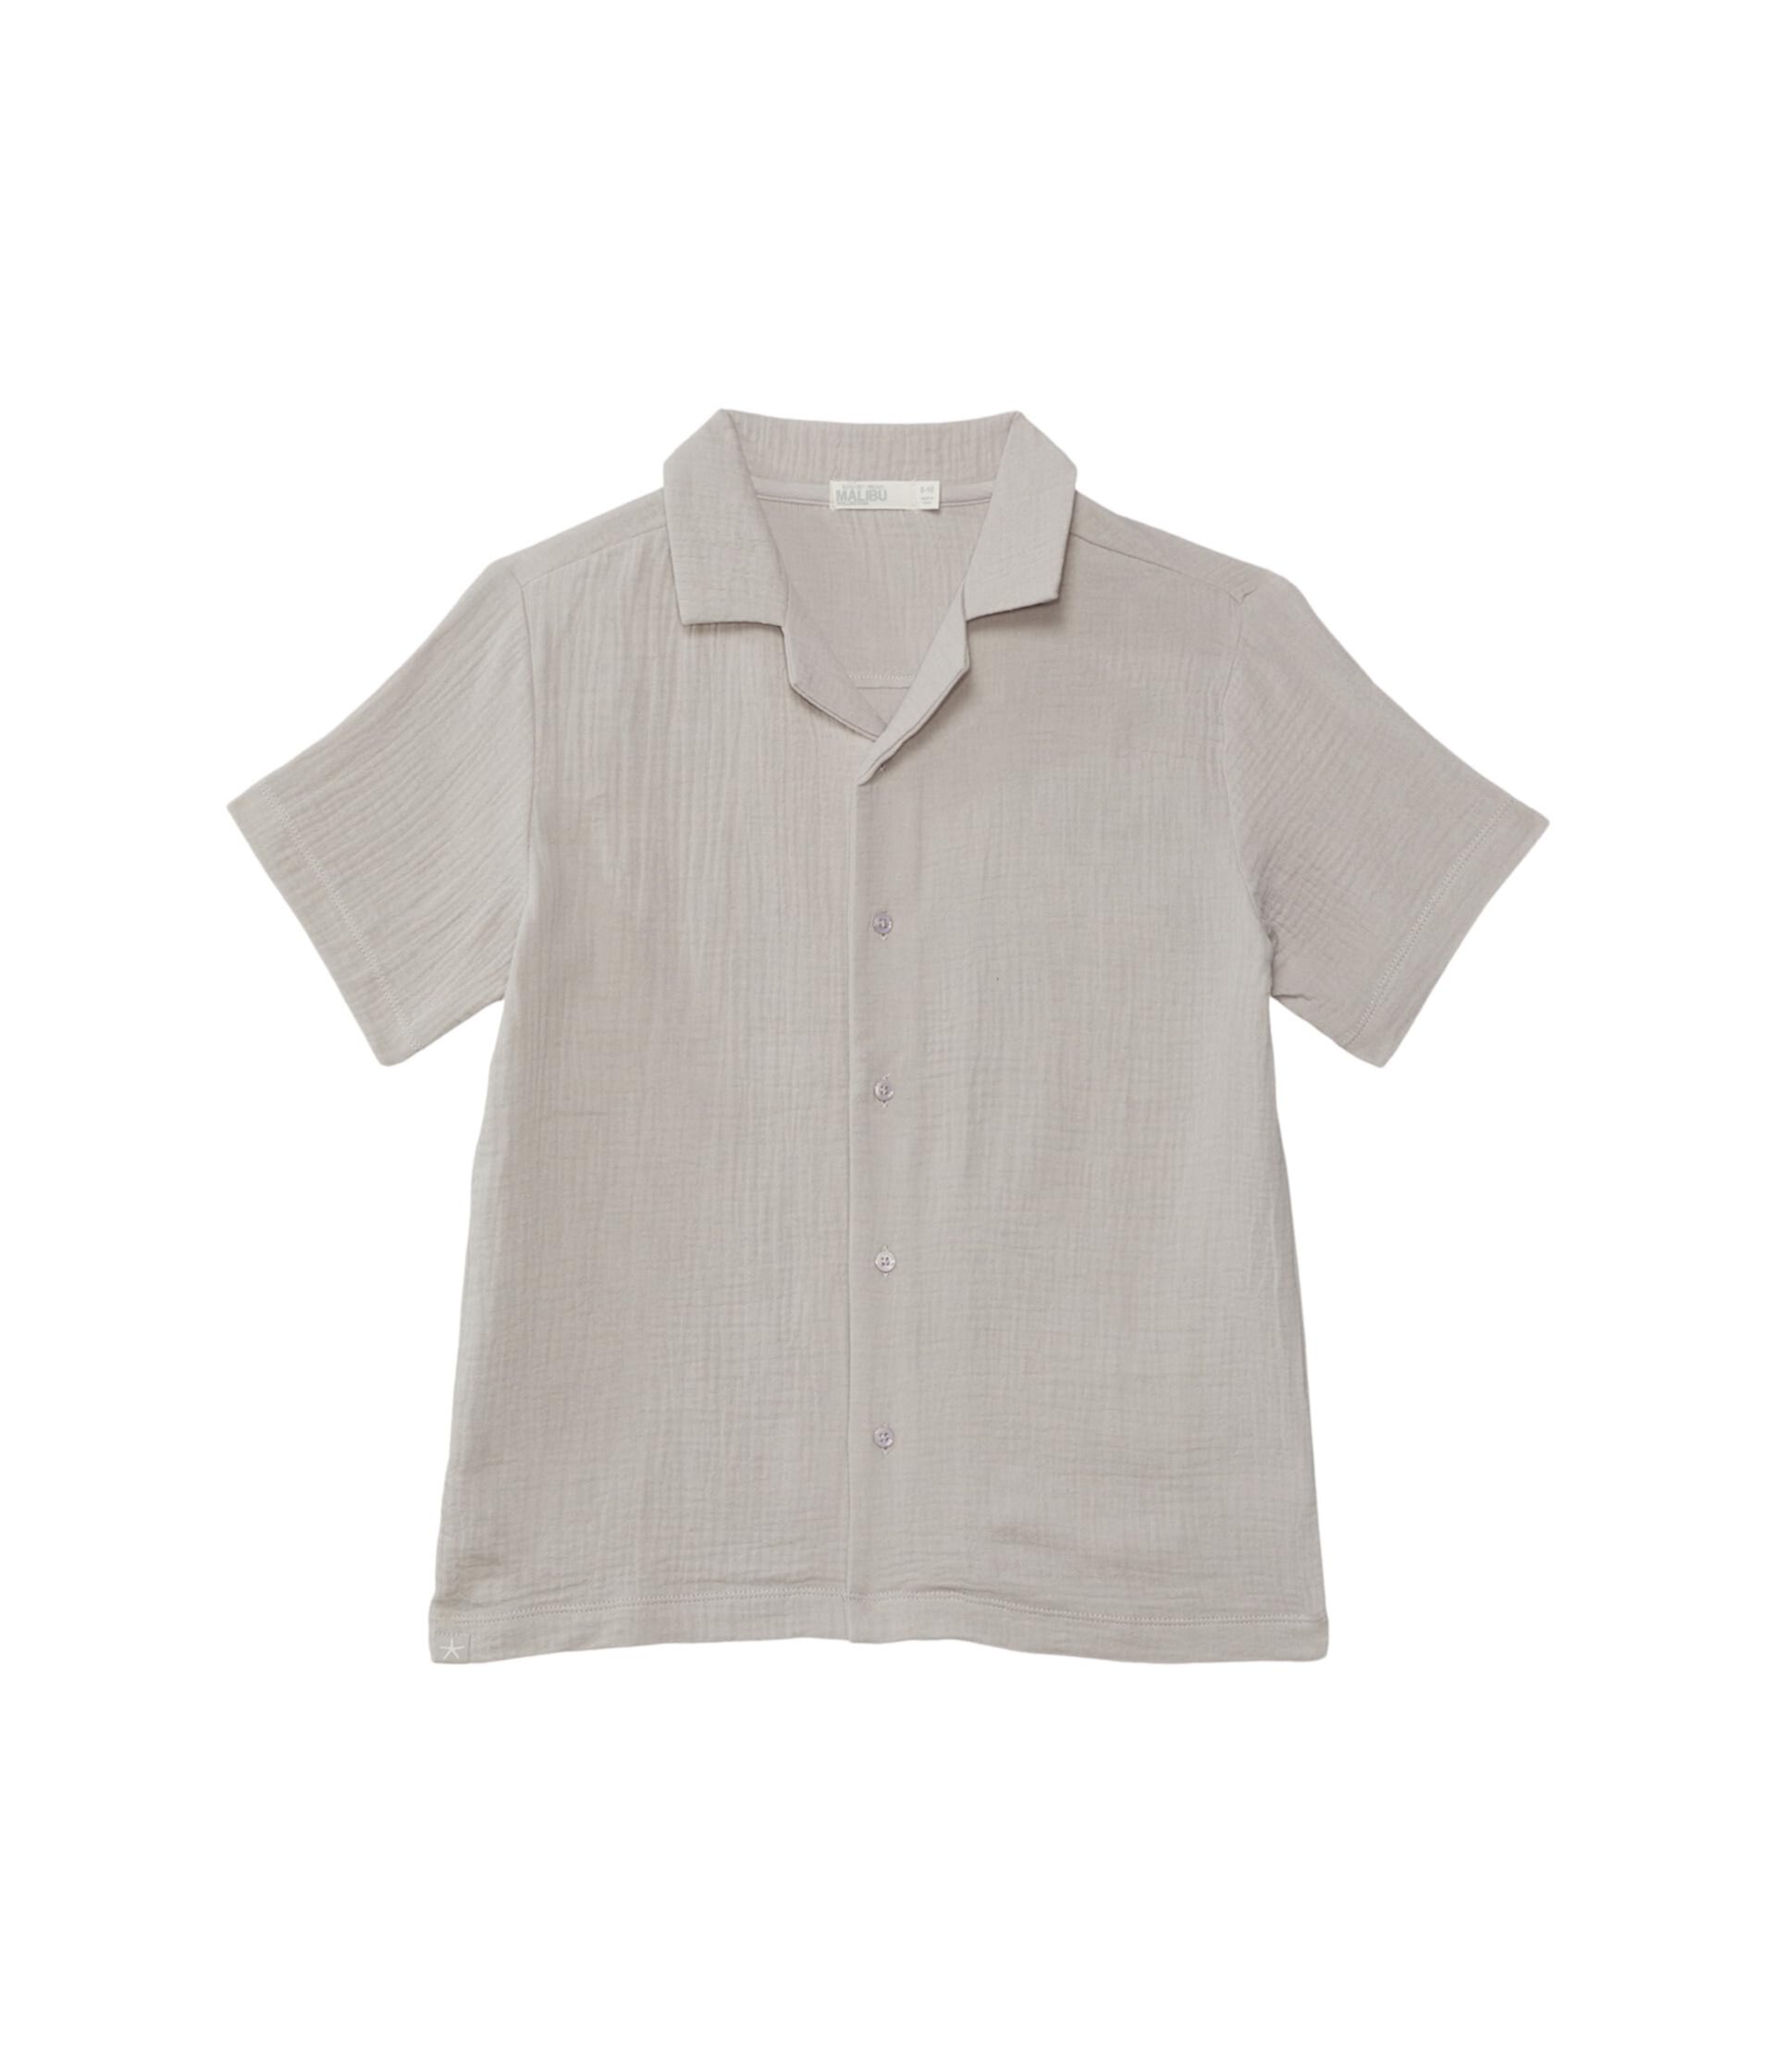 CozyChic® Malibu Collection Youth Sun Soaked Shirt (Little Kid/Big Kid) Barefoot Dreams Kids